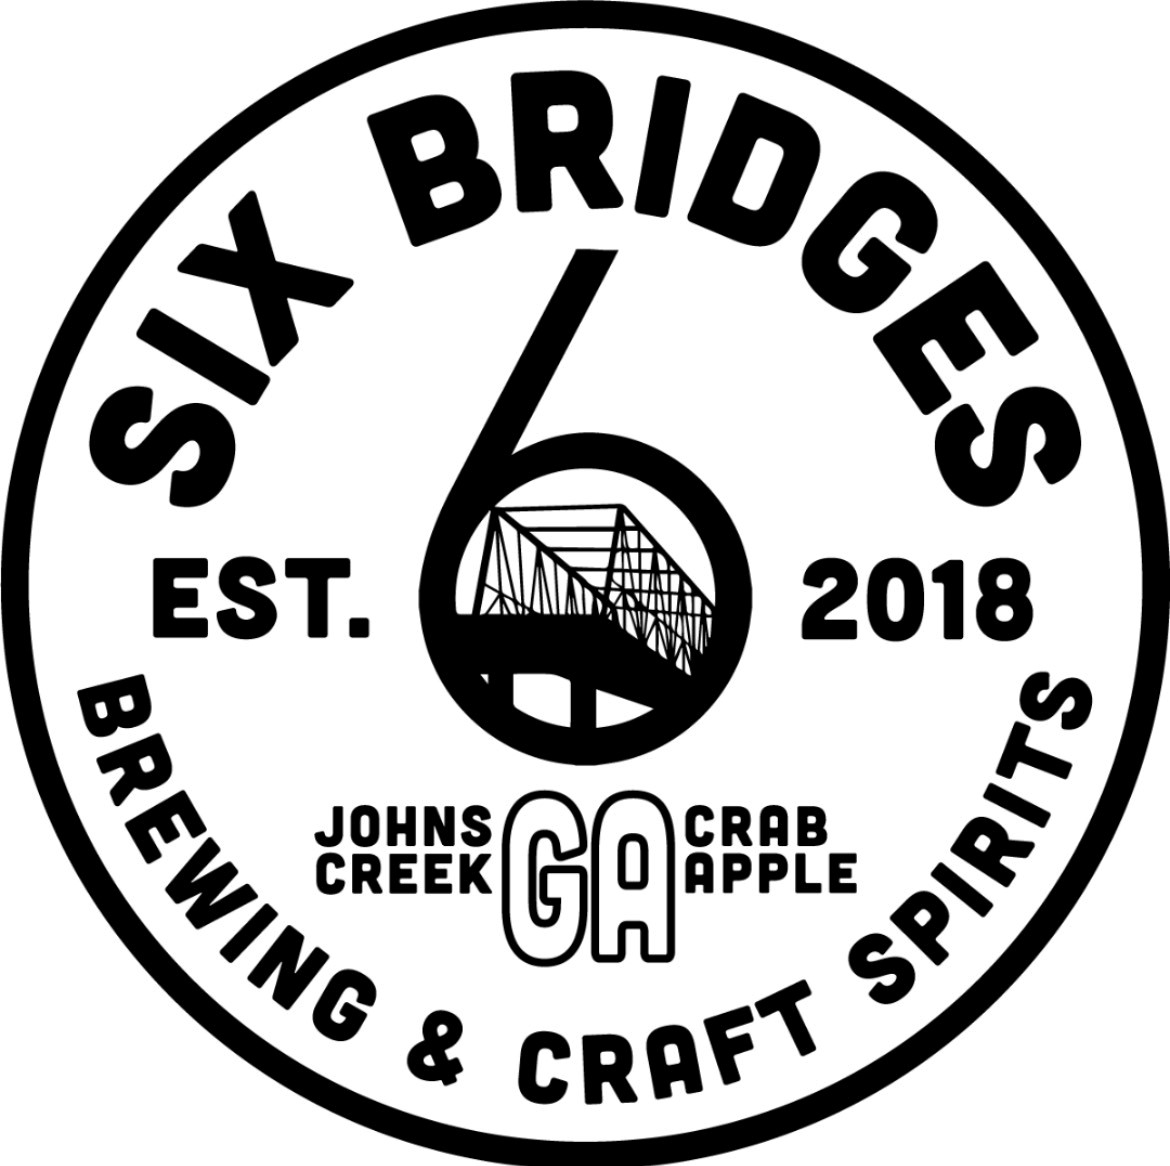 6 Bridges logo